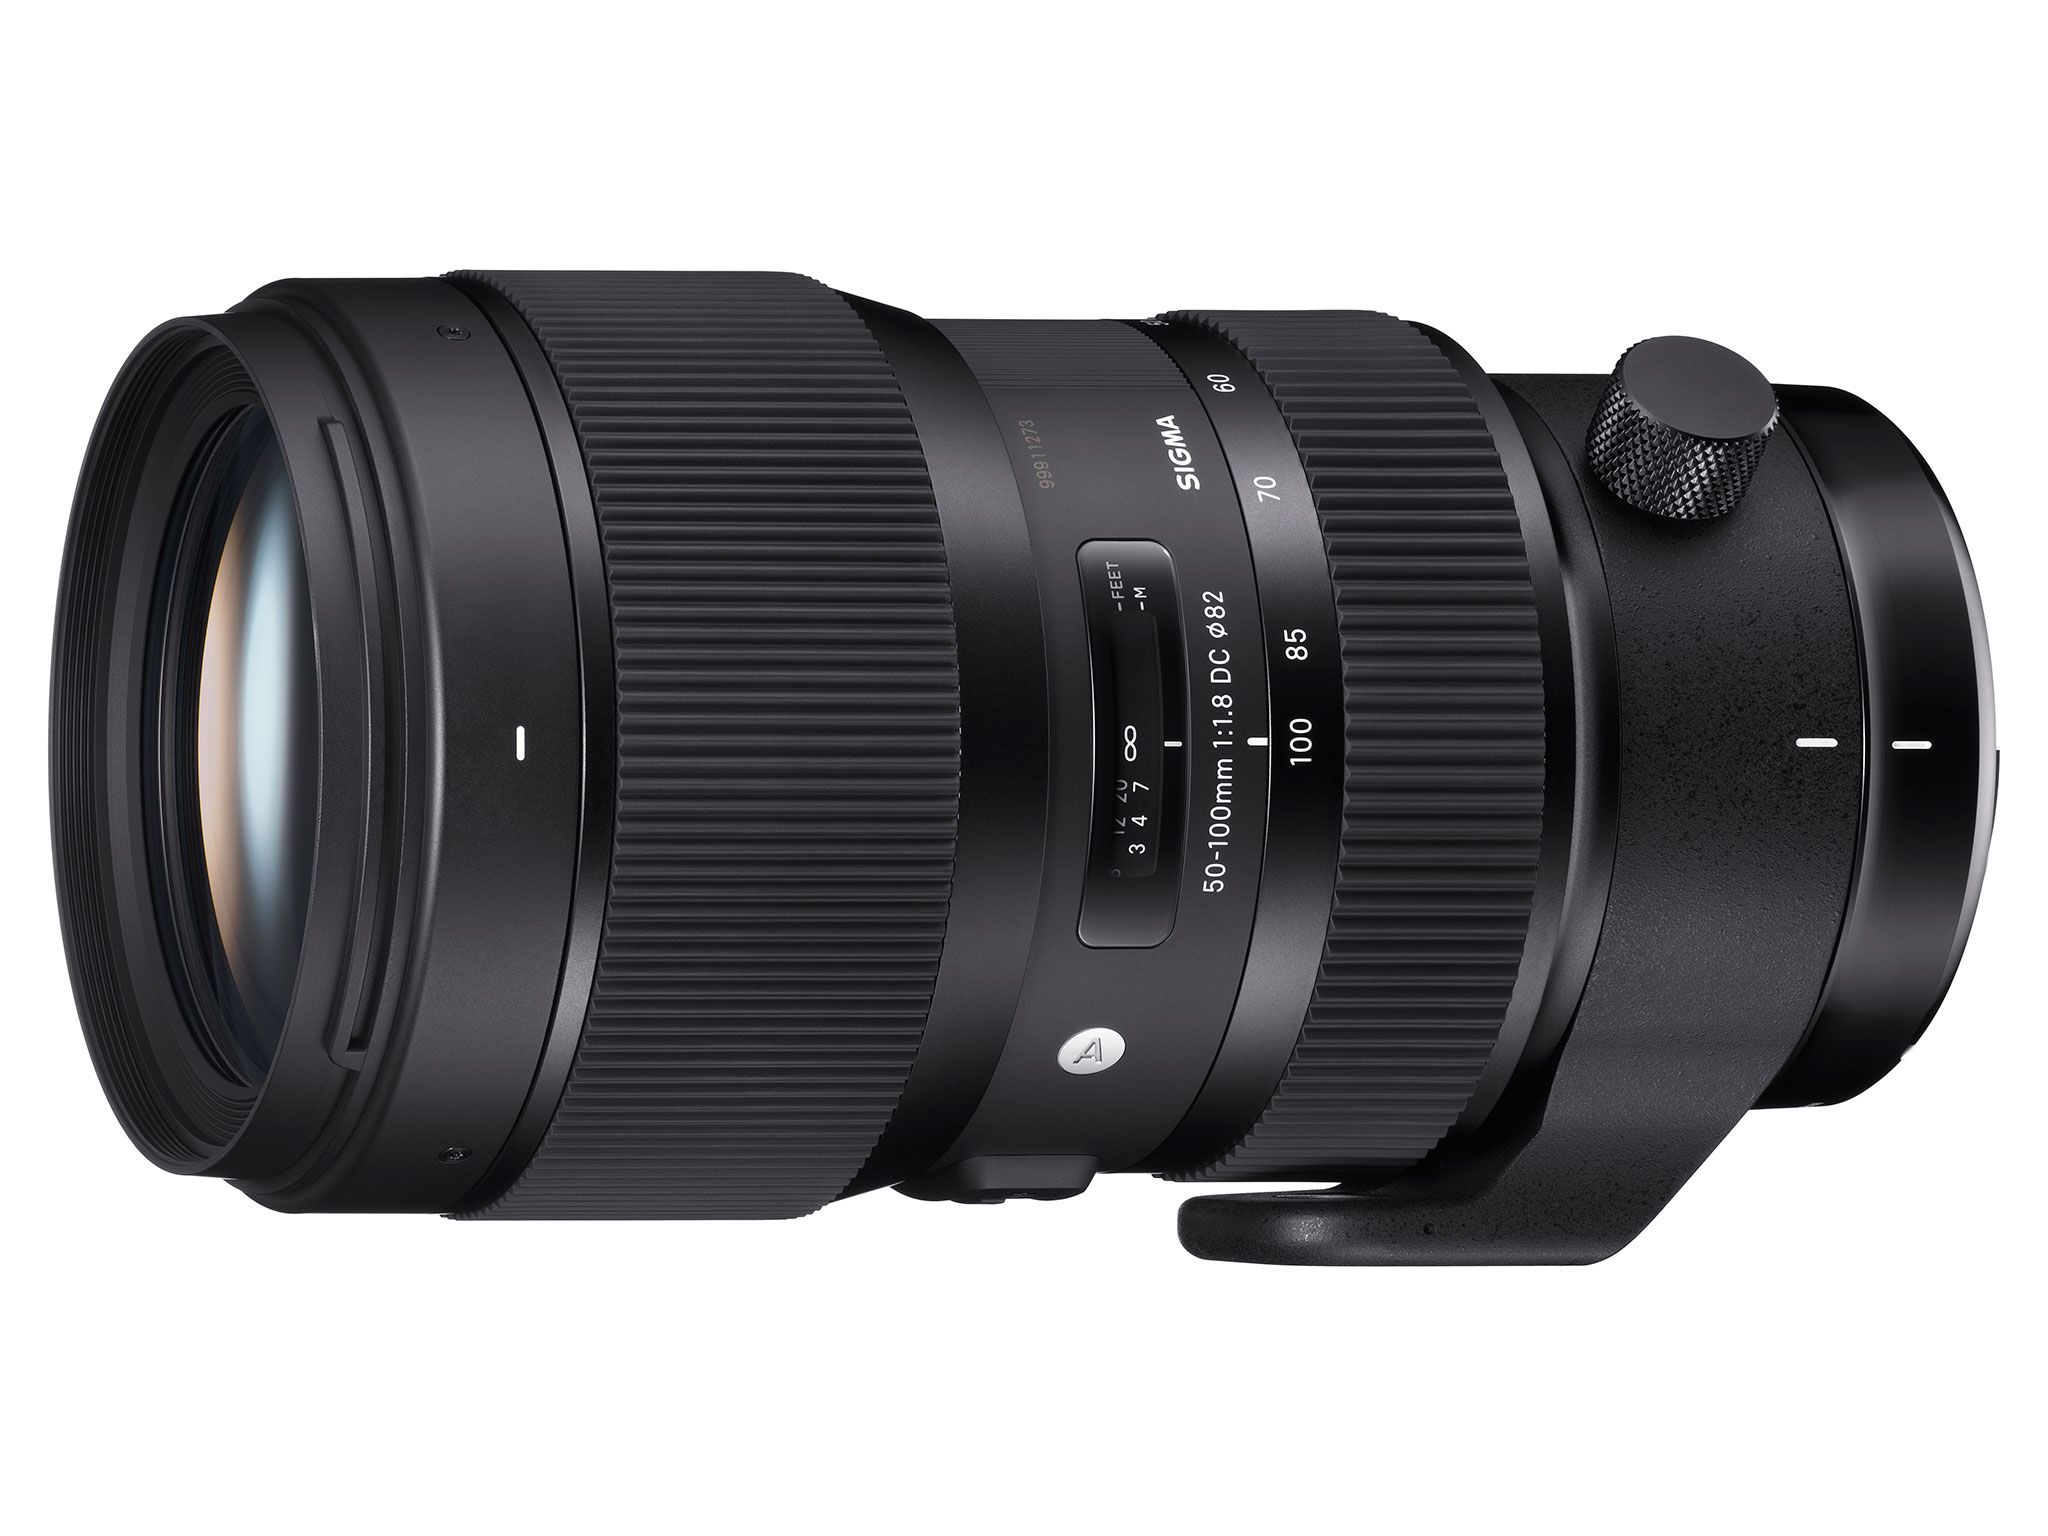 Sigma 50-100mm f/1.8 DC HSM Art Lens Price $1,099, Pre-order Links